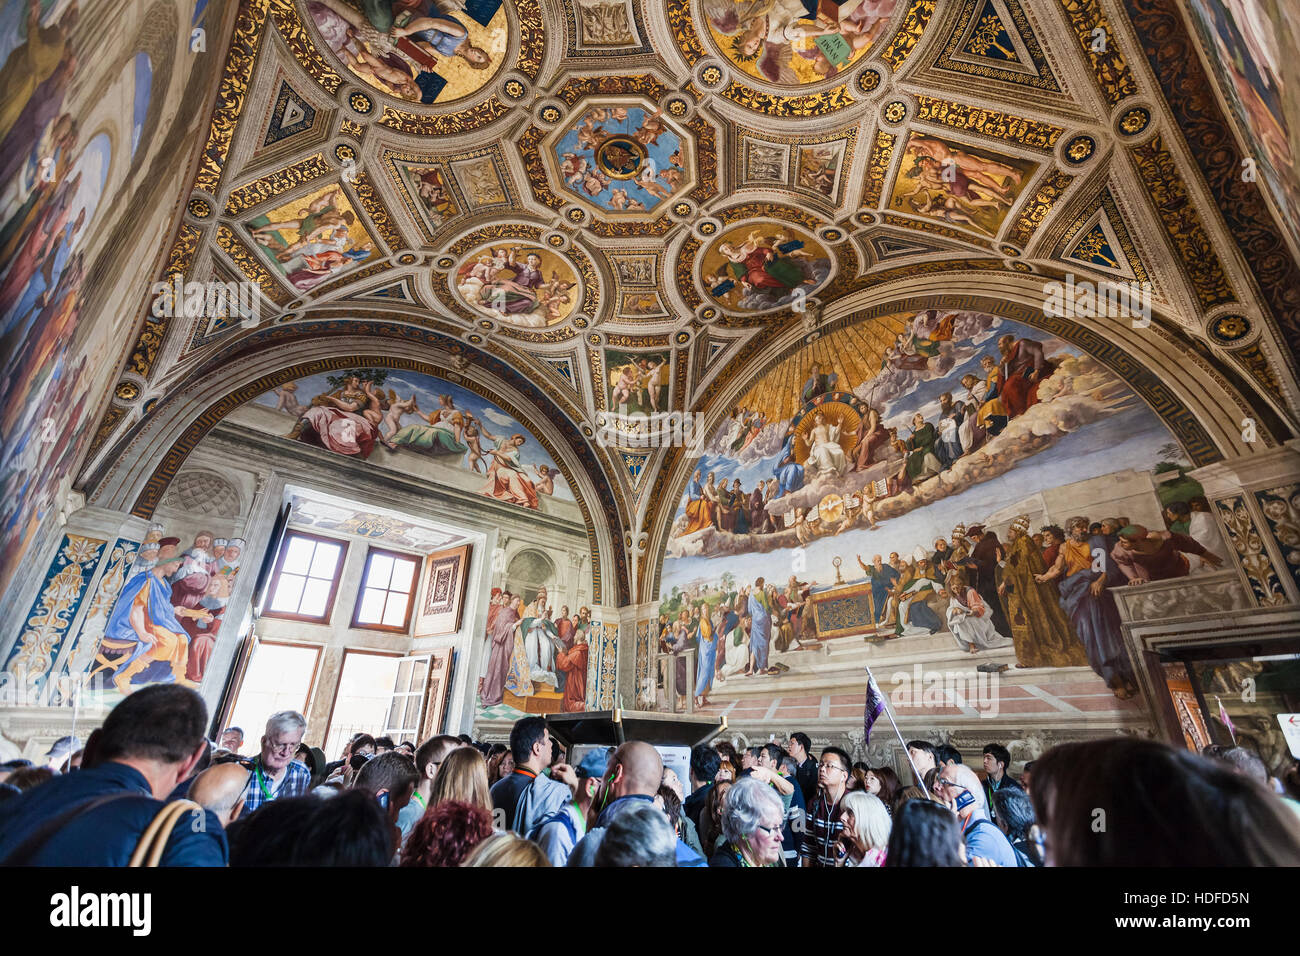 VATICAN, ITALY - NOVEMBER 2, 2016: Visitors in Stanza della segnatura (Room of the Signatura) decorated by Raphael's frescoes in Raphael Rooms (Stanze Stock Photo